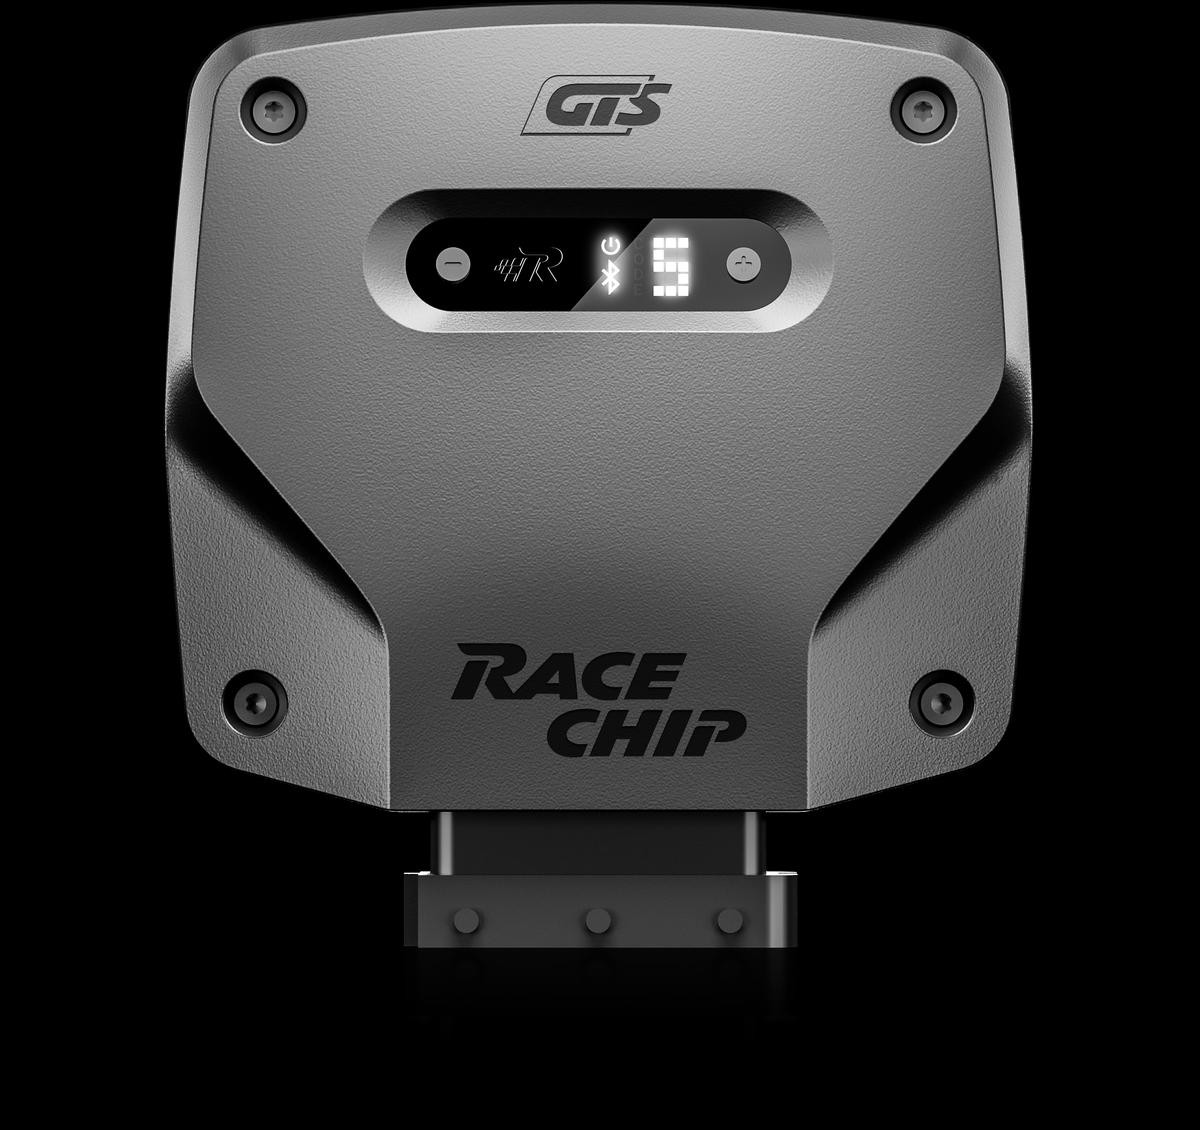 Opel INSIGNIA Chip tuning RaceChip 74652210 cheap